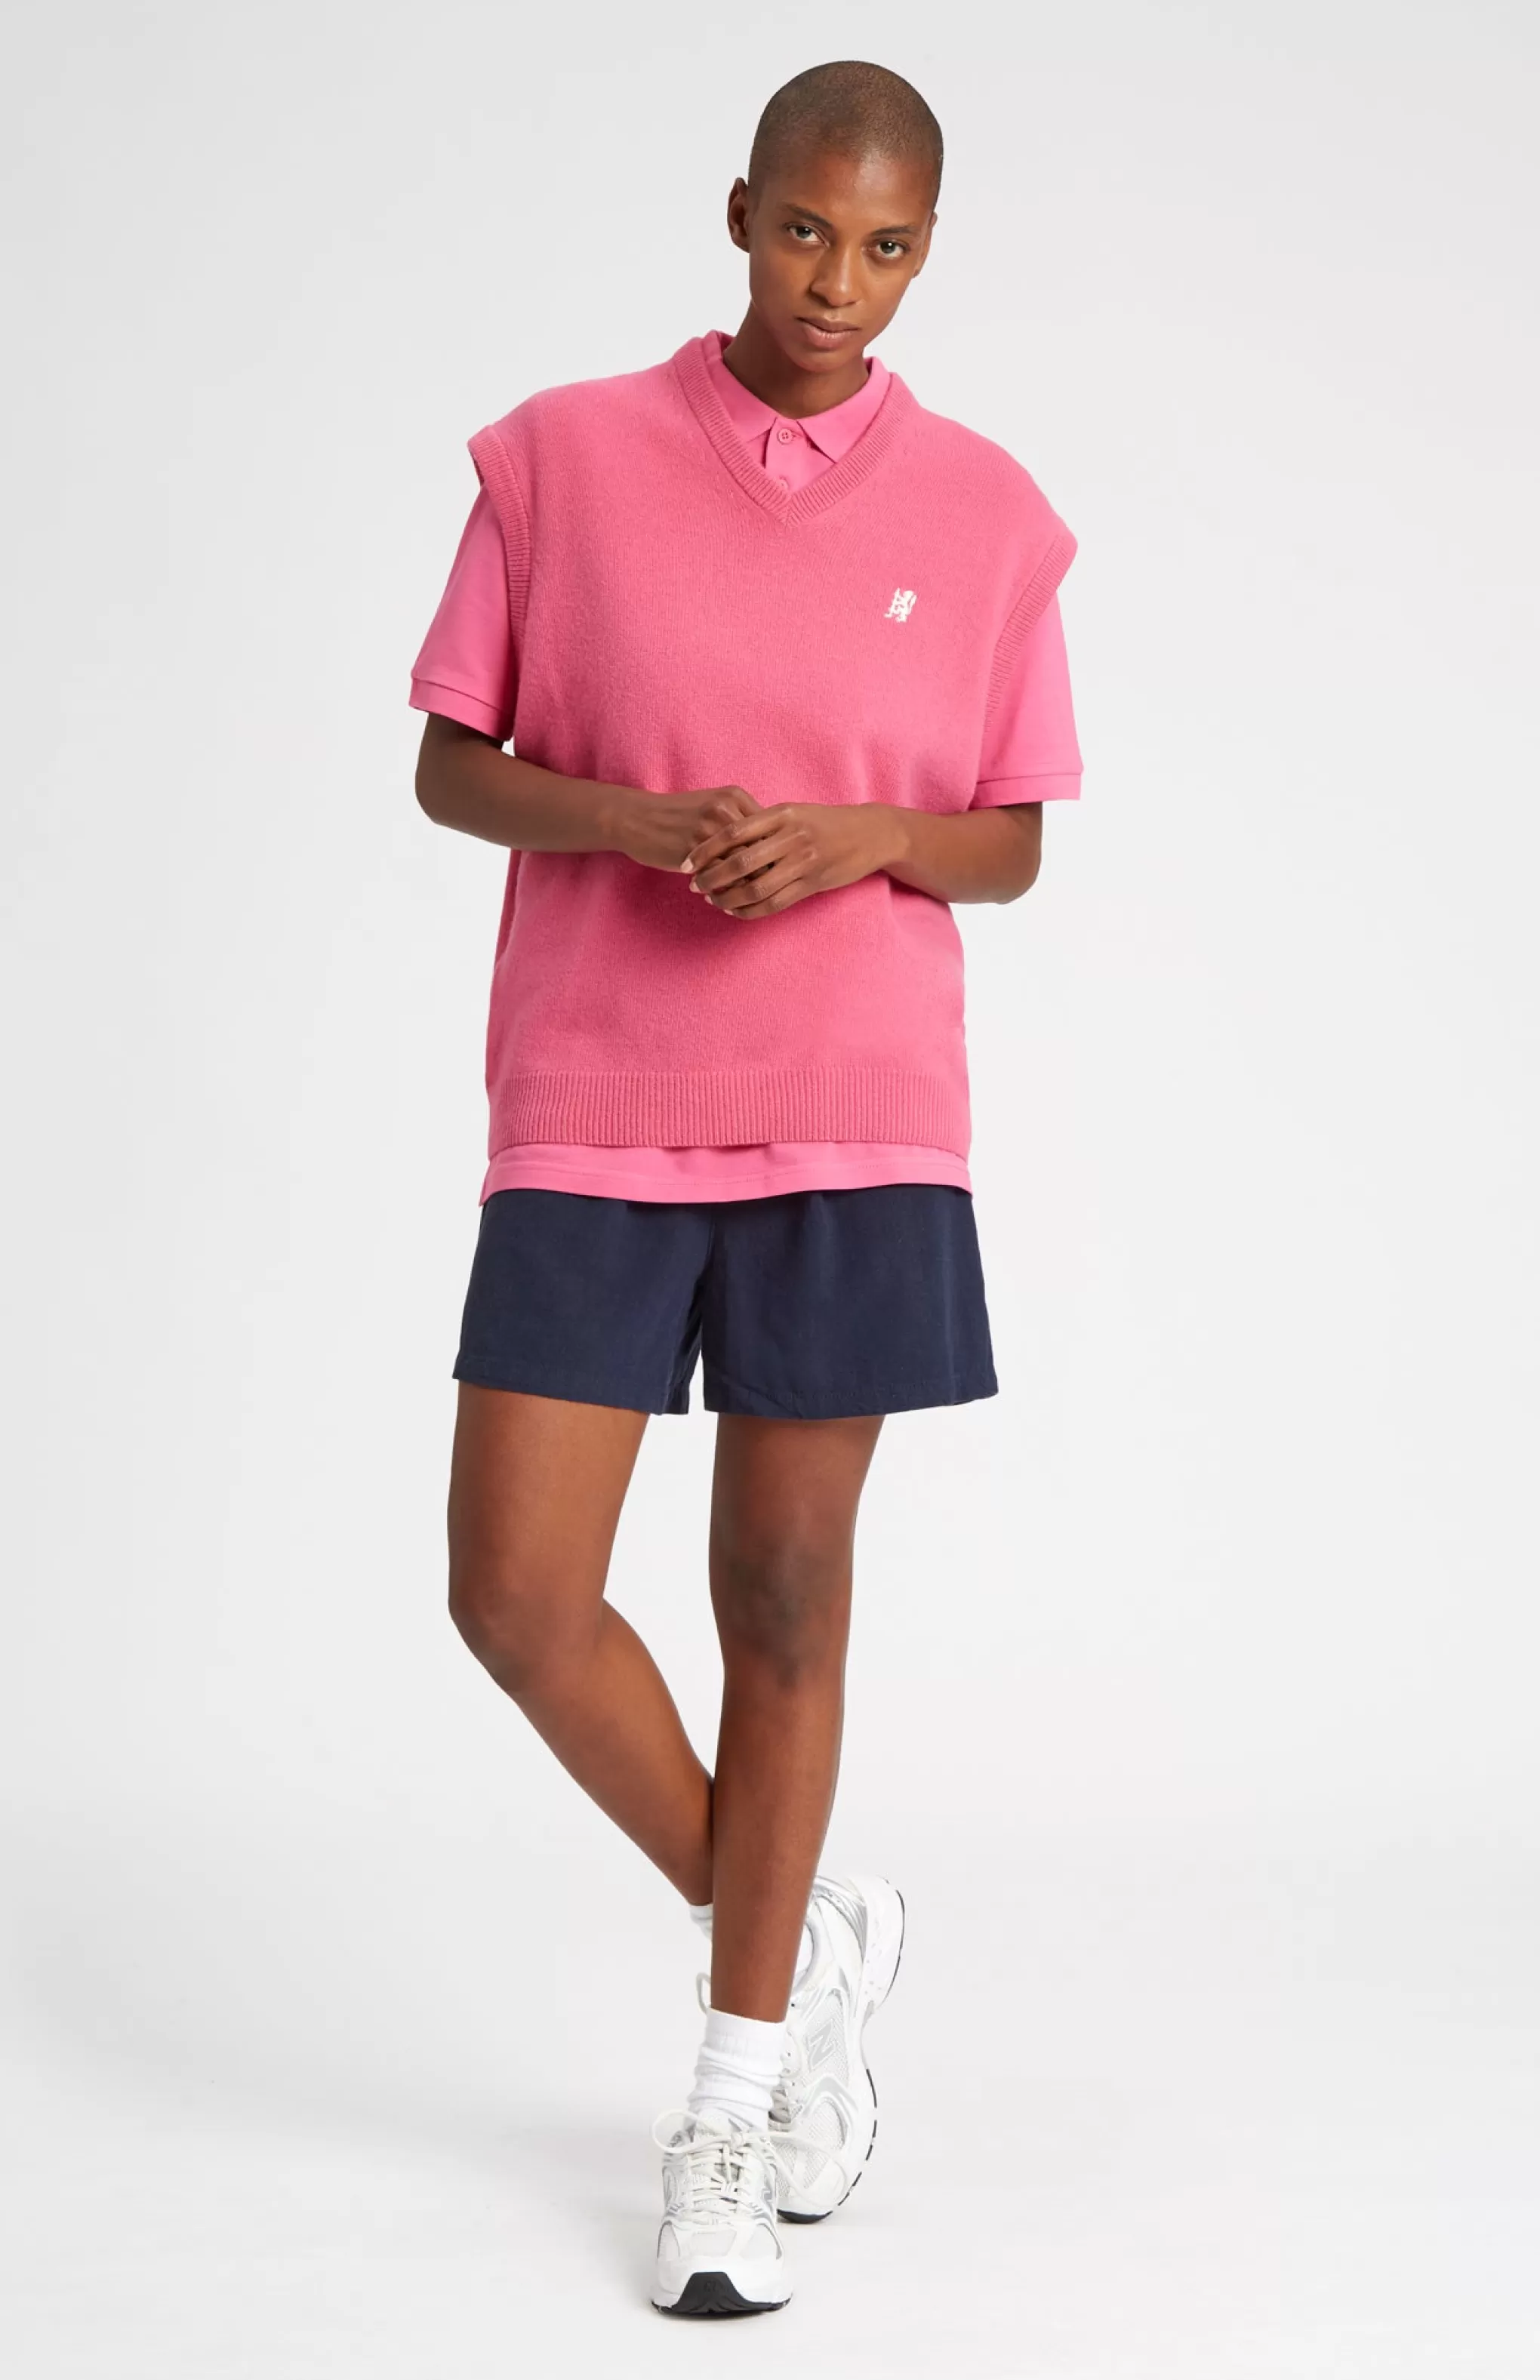 Cheap V Neck Sleeveless Golf Jumper In Heather Pink With Golfing Lion Logo Men/Women Vests